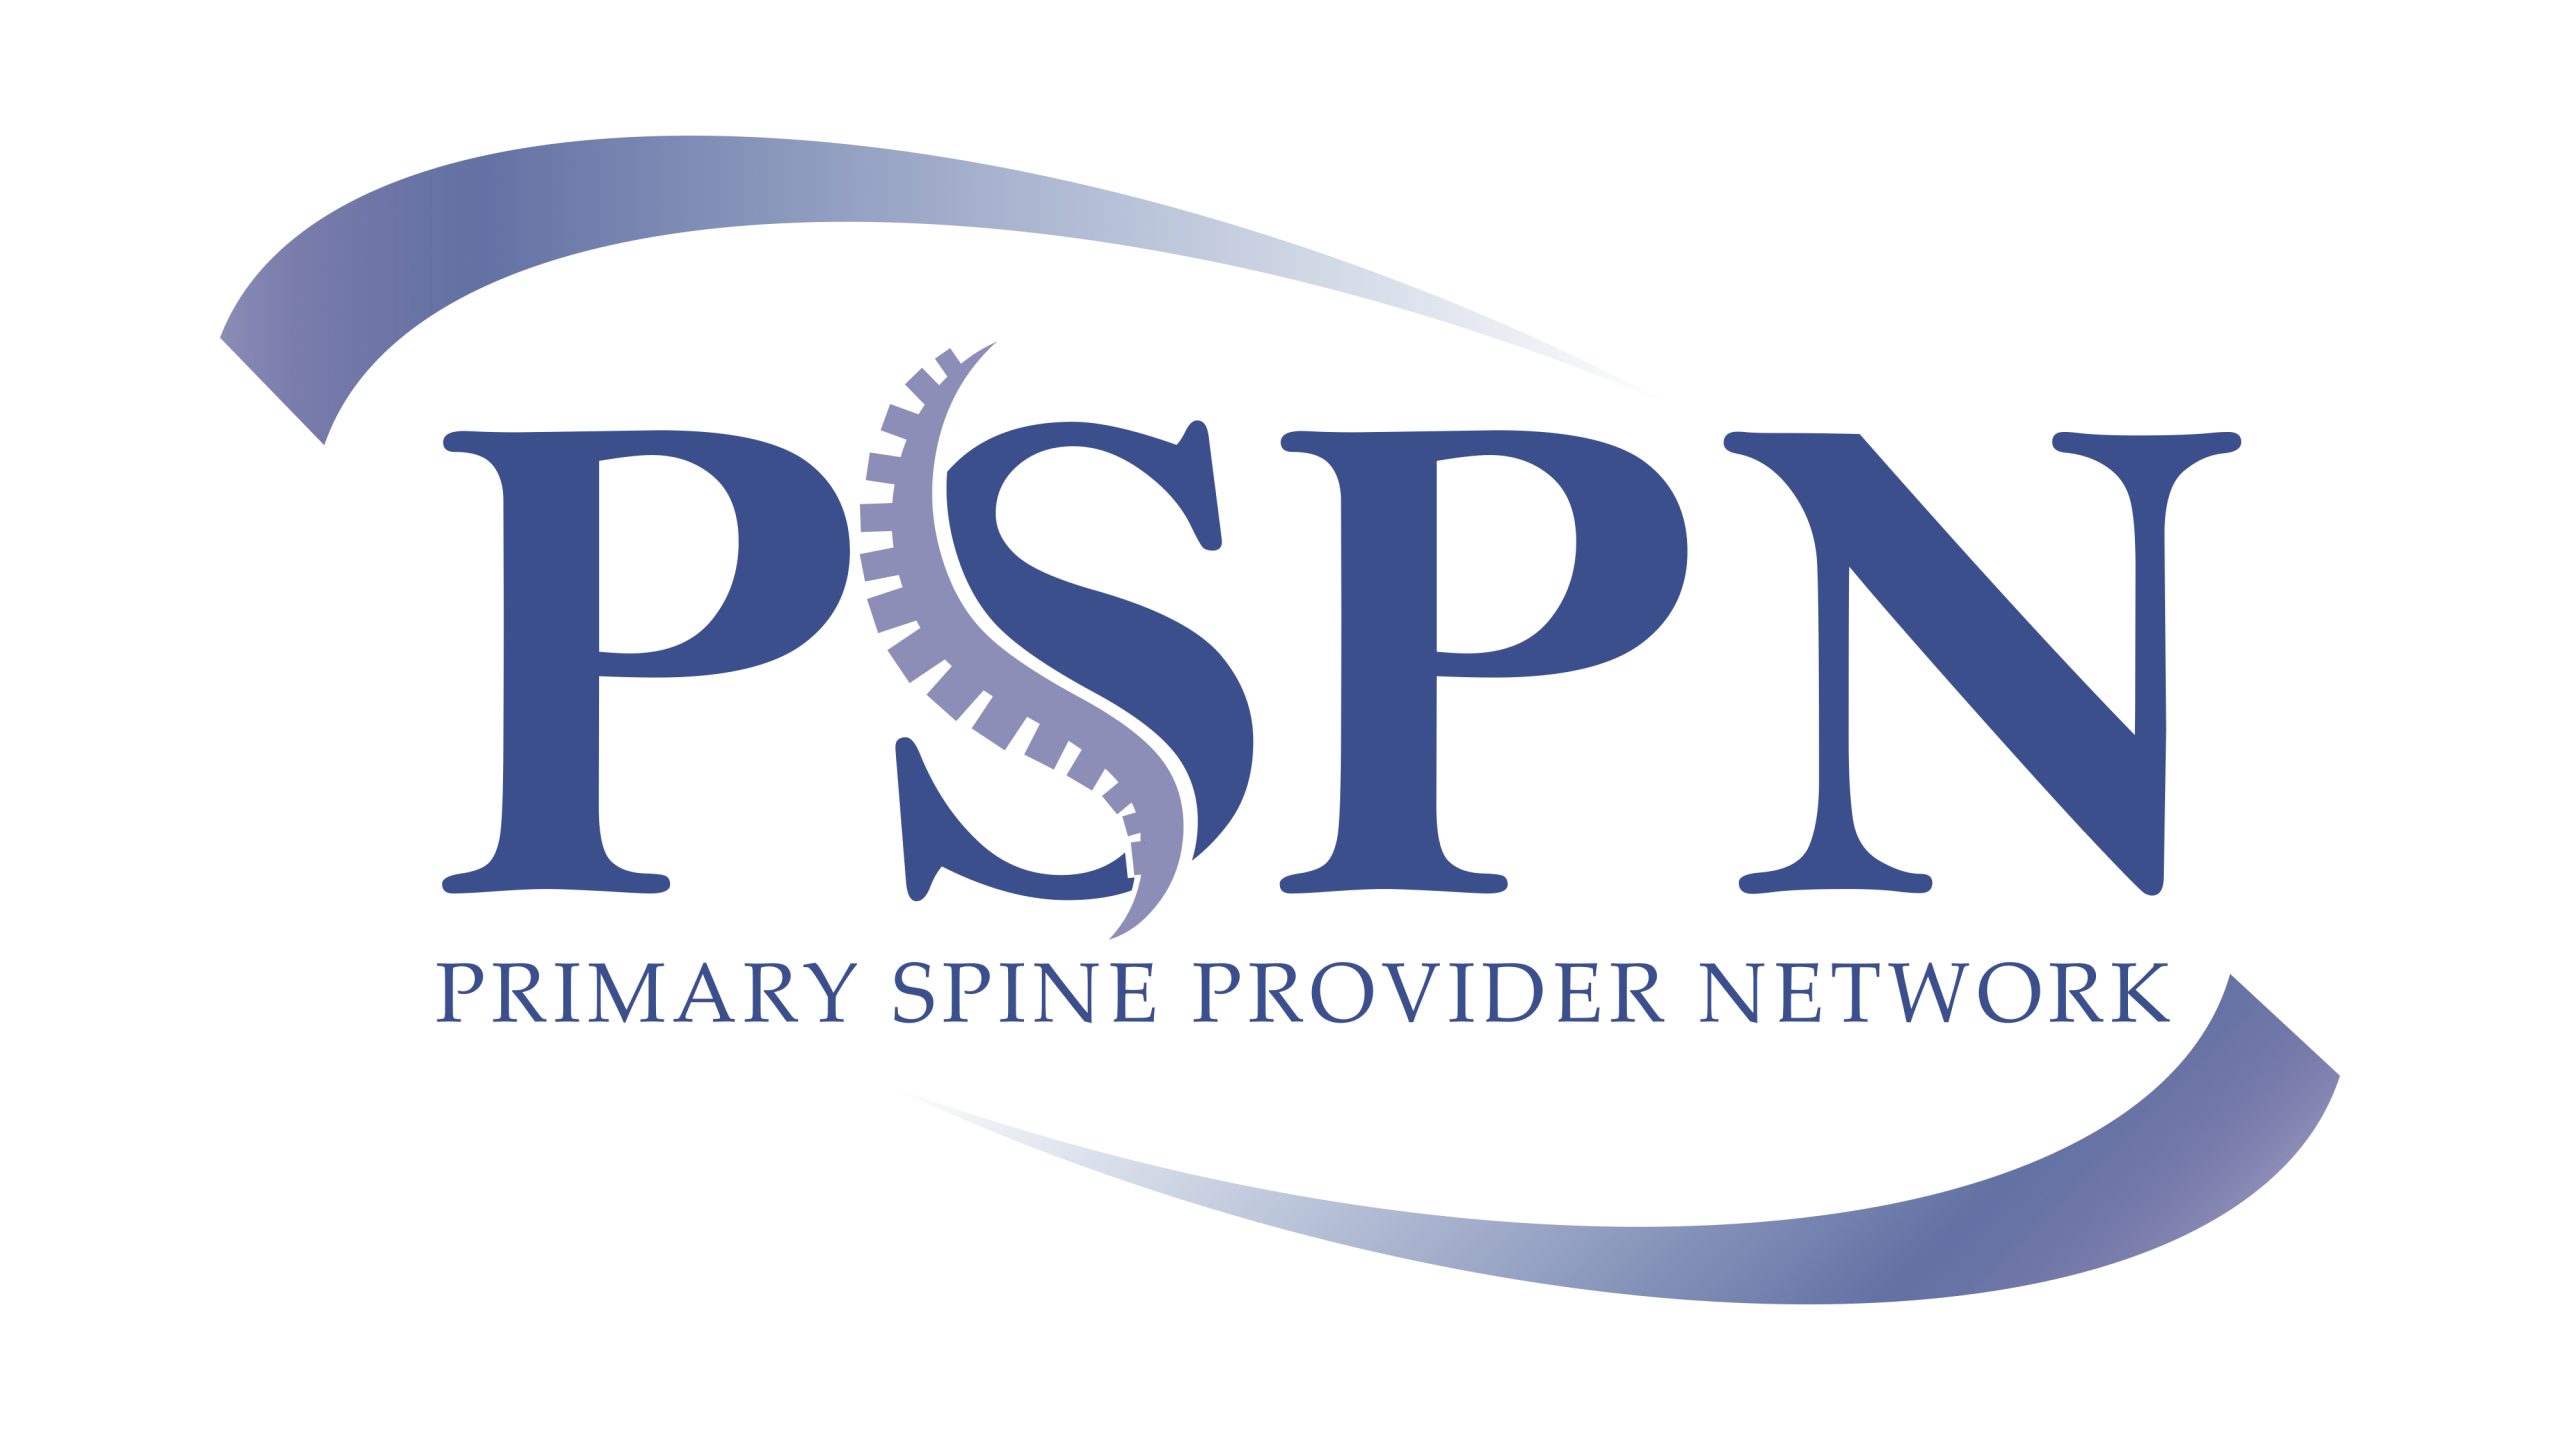 Primary Spine Provider Network